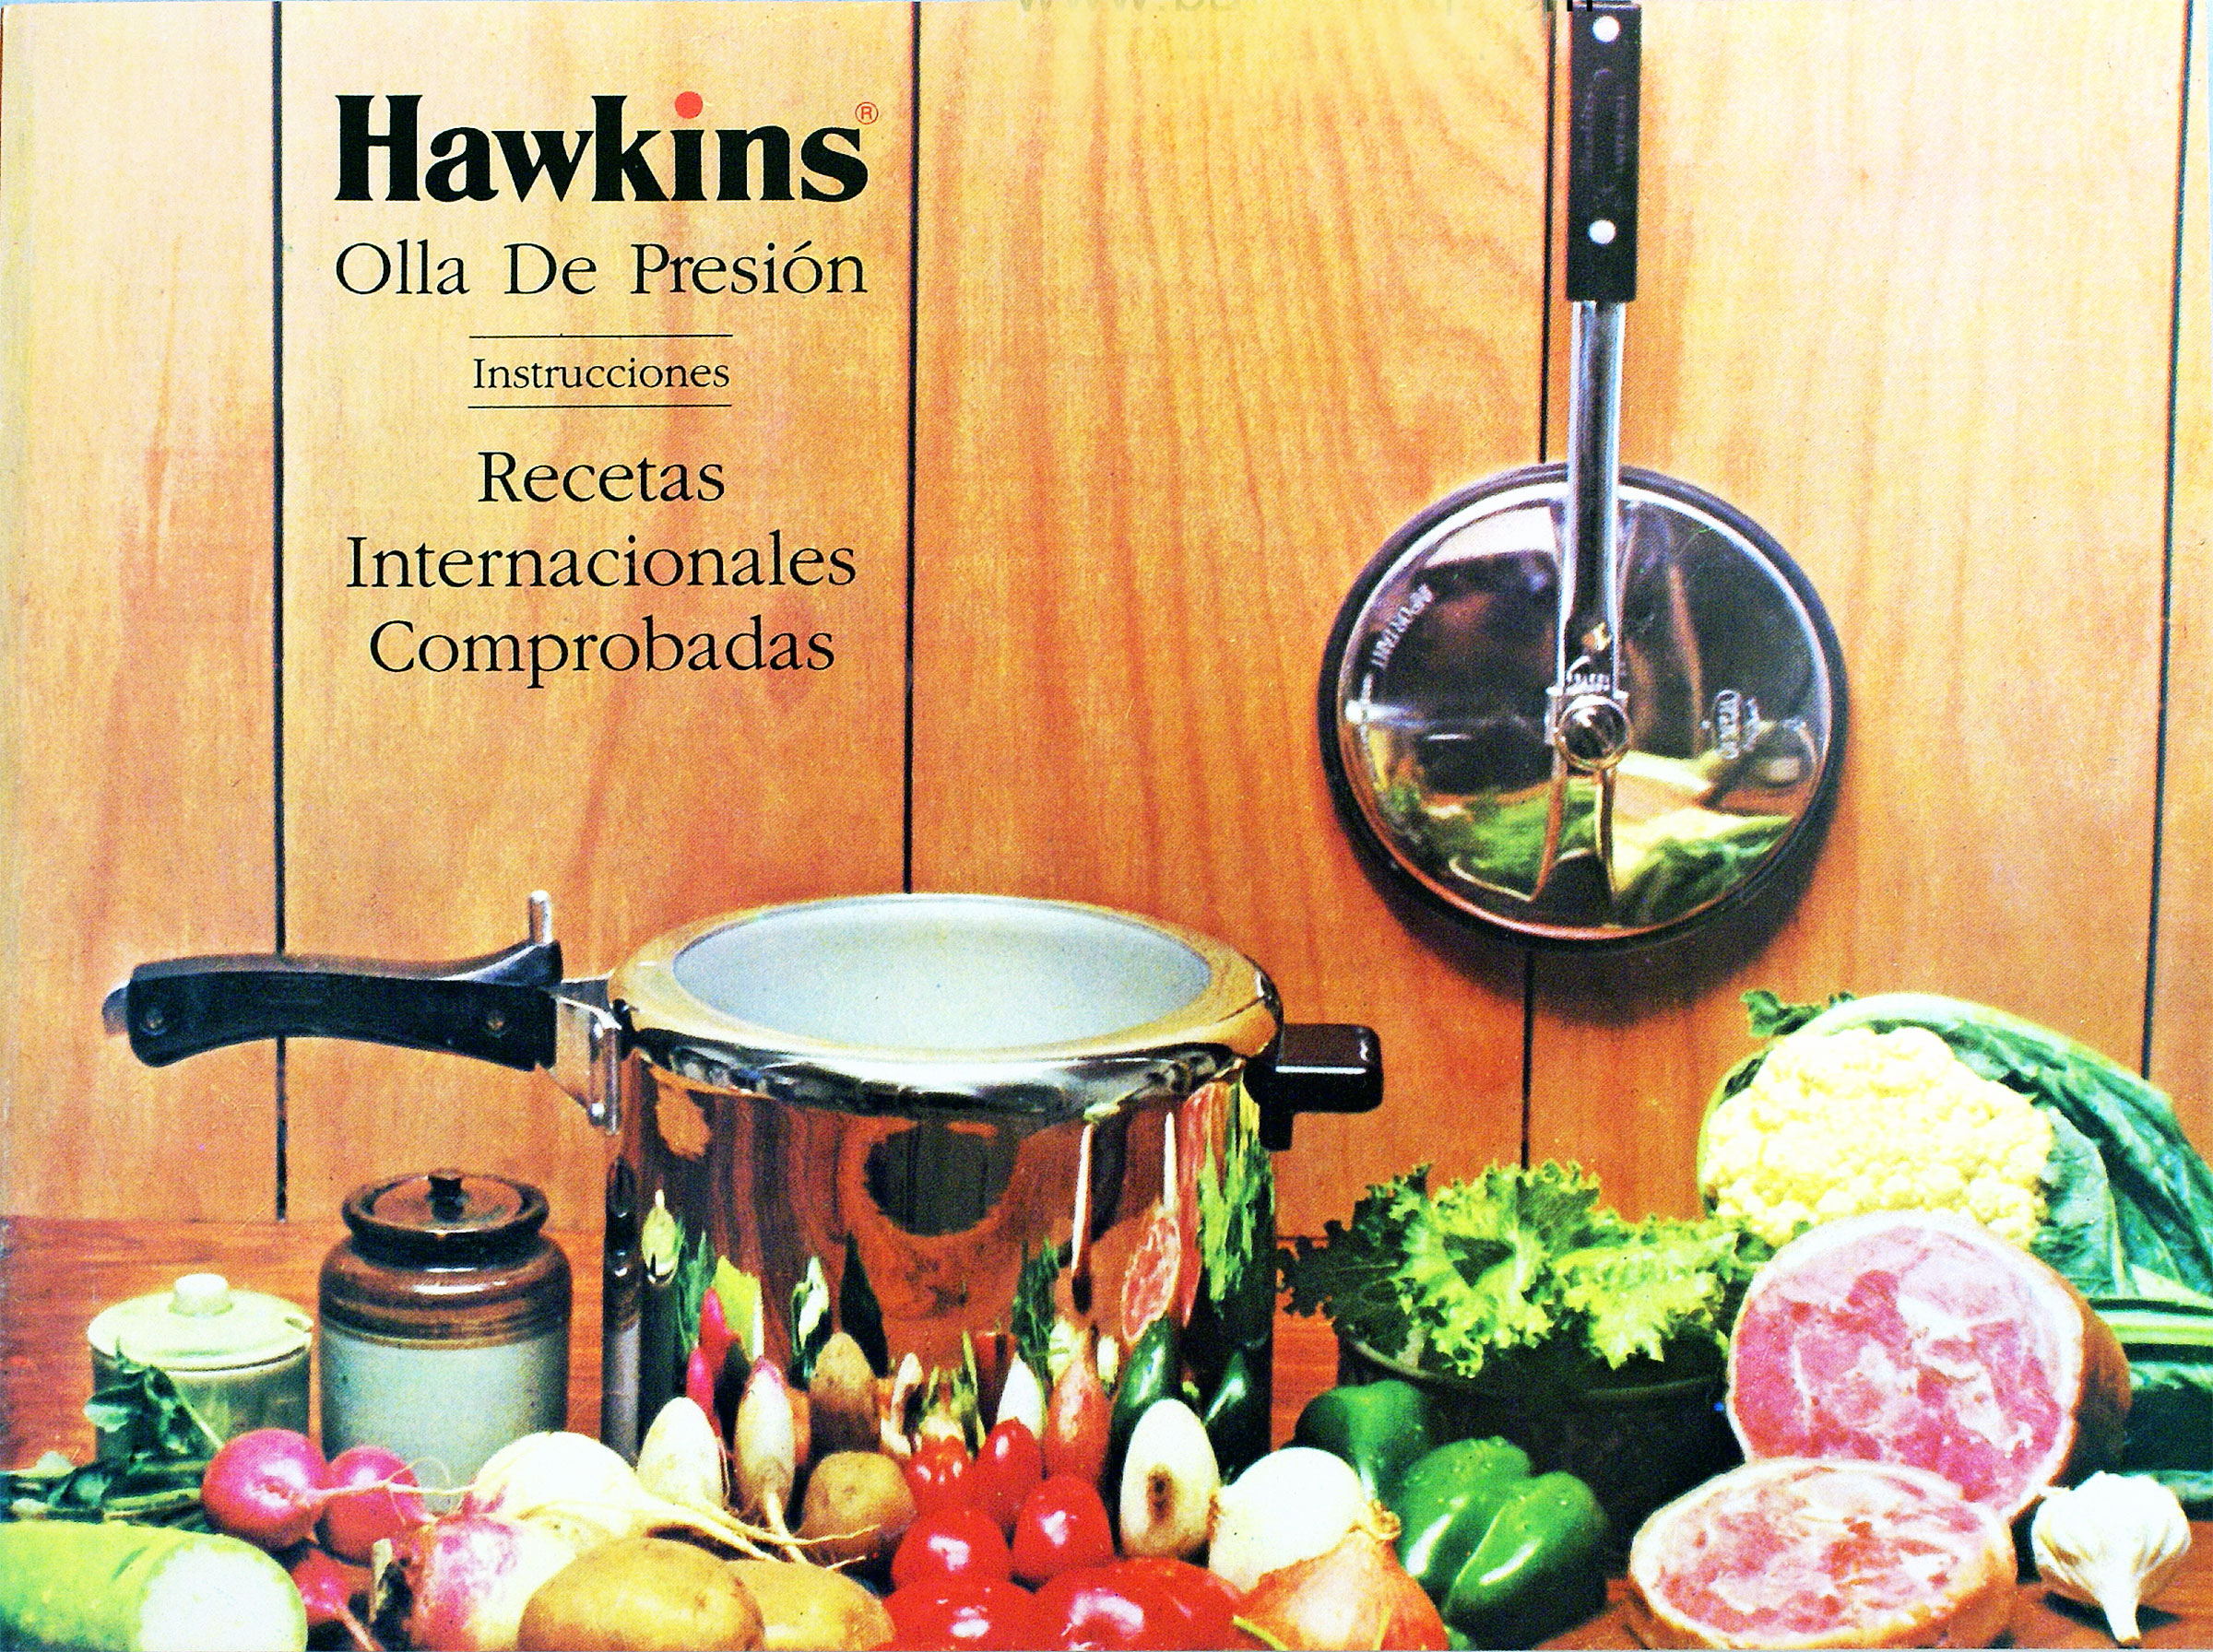  Hawkins - Instruction Manual - Spanish 